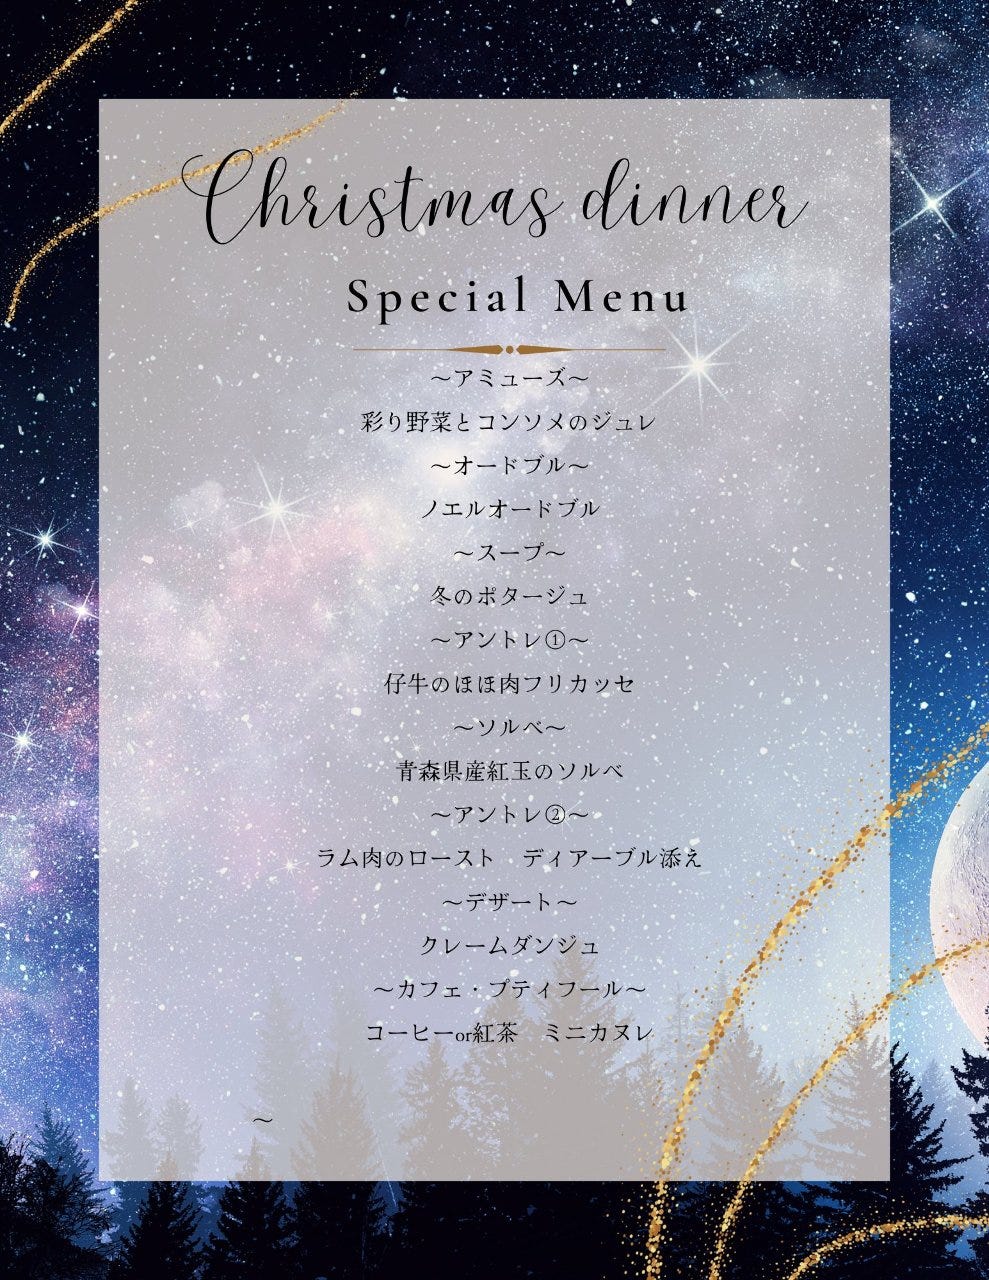 ☆12月23、24、25日限定☆
〜Special Xmas dinner〜1名11,000円